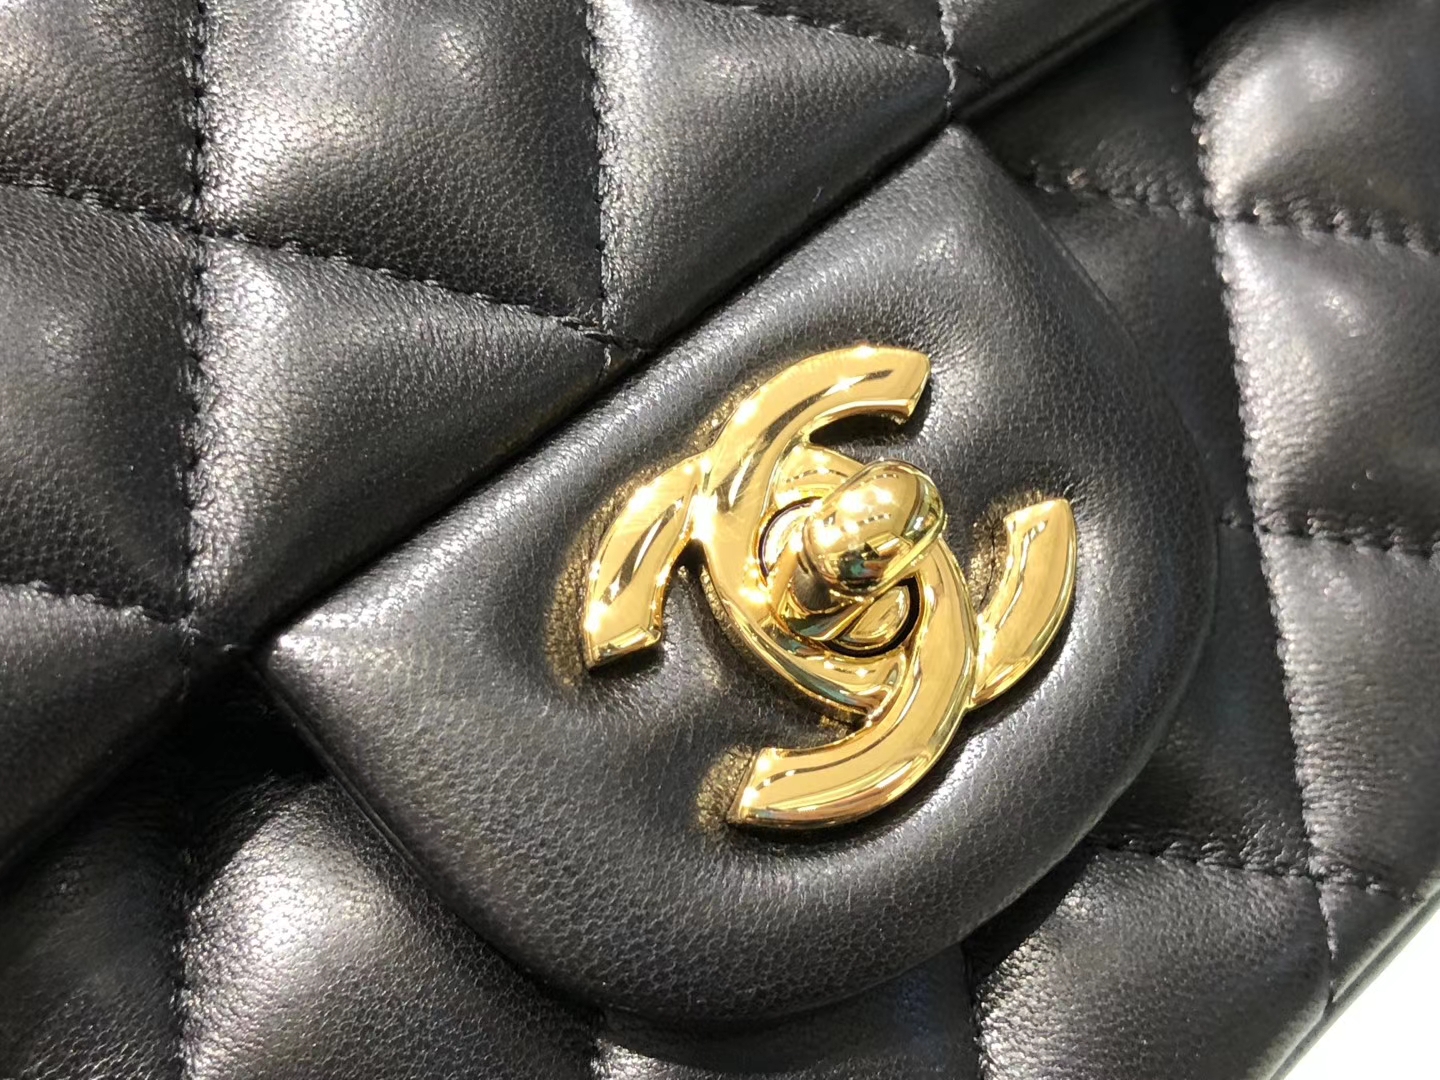 Chanel（香奈儿）cf # 链条包 羊皮 黑色 金扣 金链 25cm